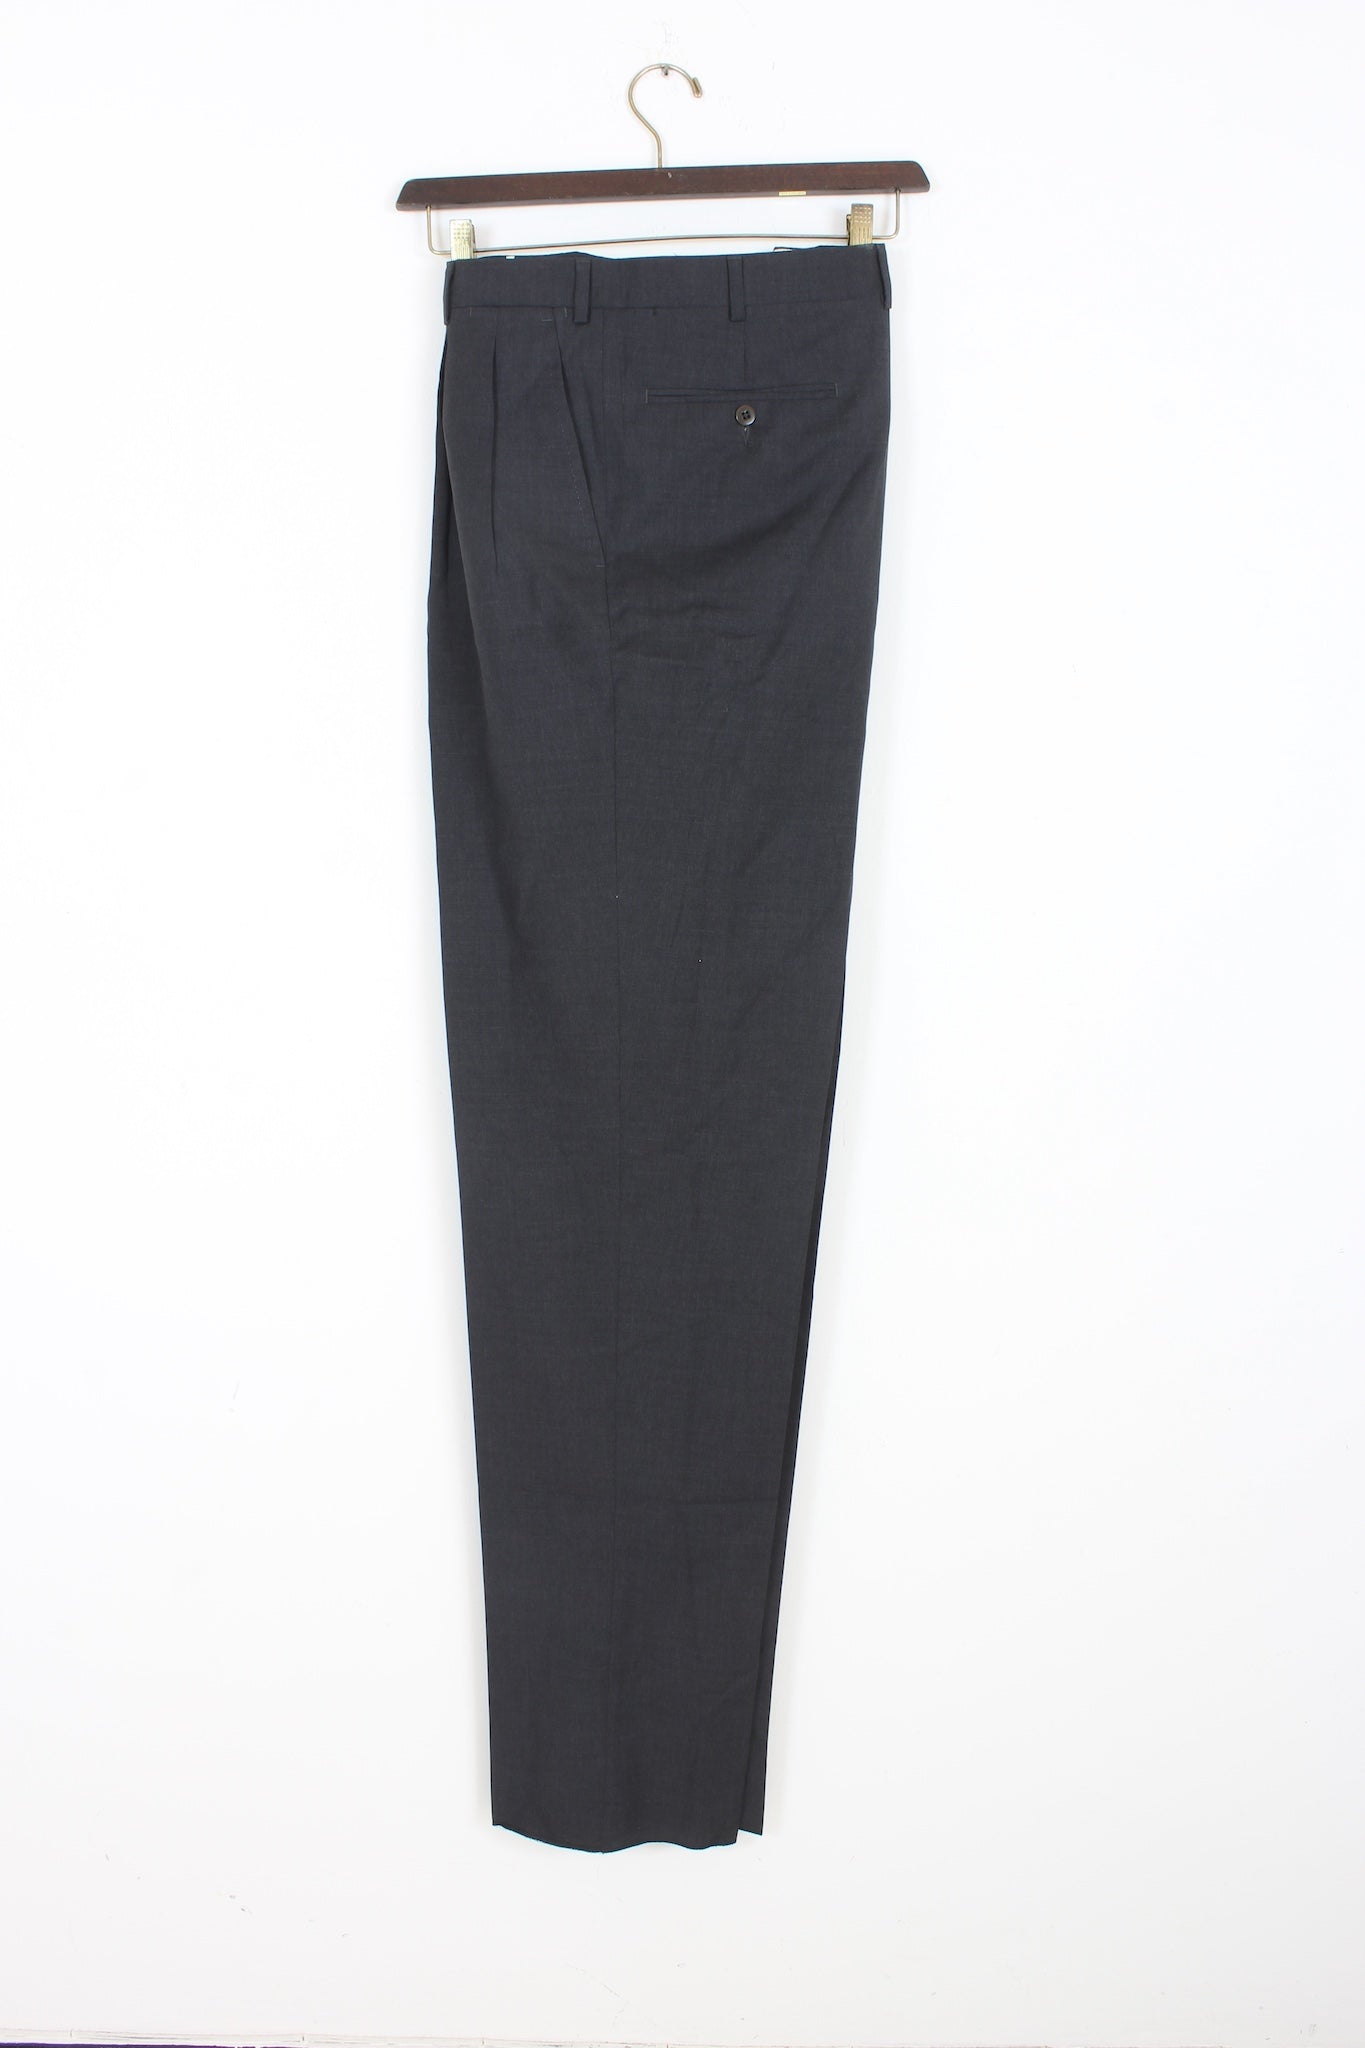 Thomas Burberry Vintage Cargo Beige Pants Mens Sz34 6 Pockets Cotton | eBay